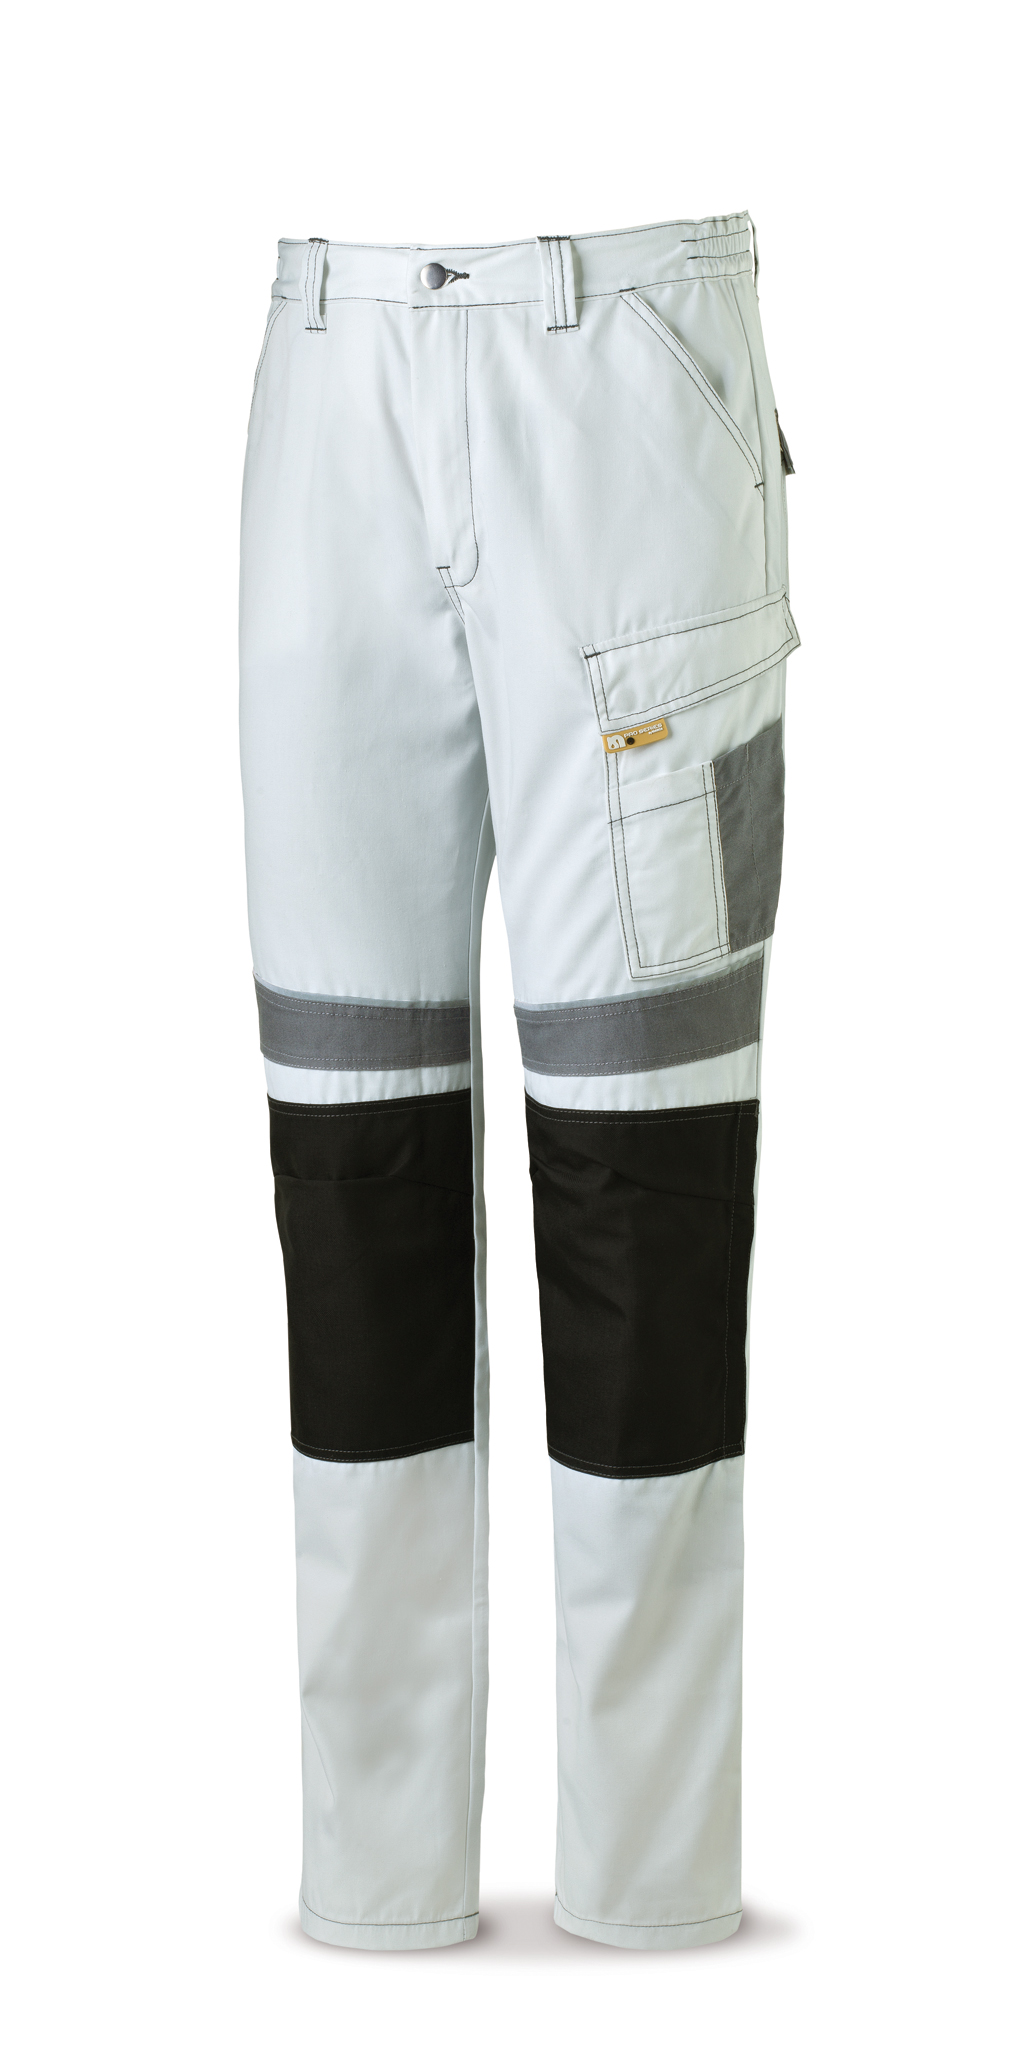 588-PBG Workwear Pro Series Tergal 245gr. Canvas trousers. White/Grey.